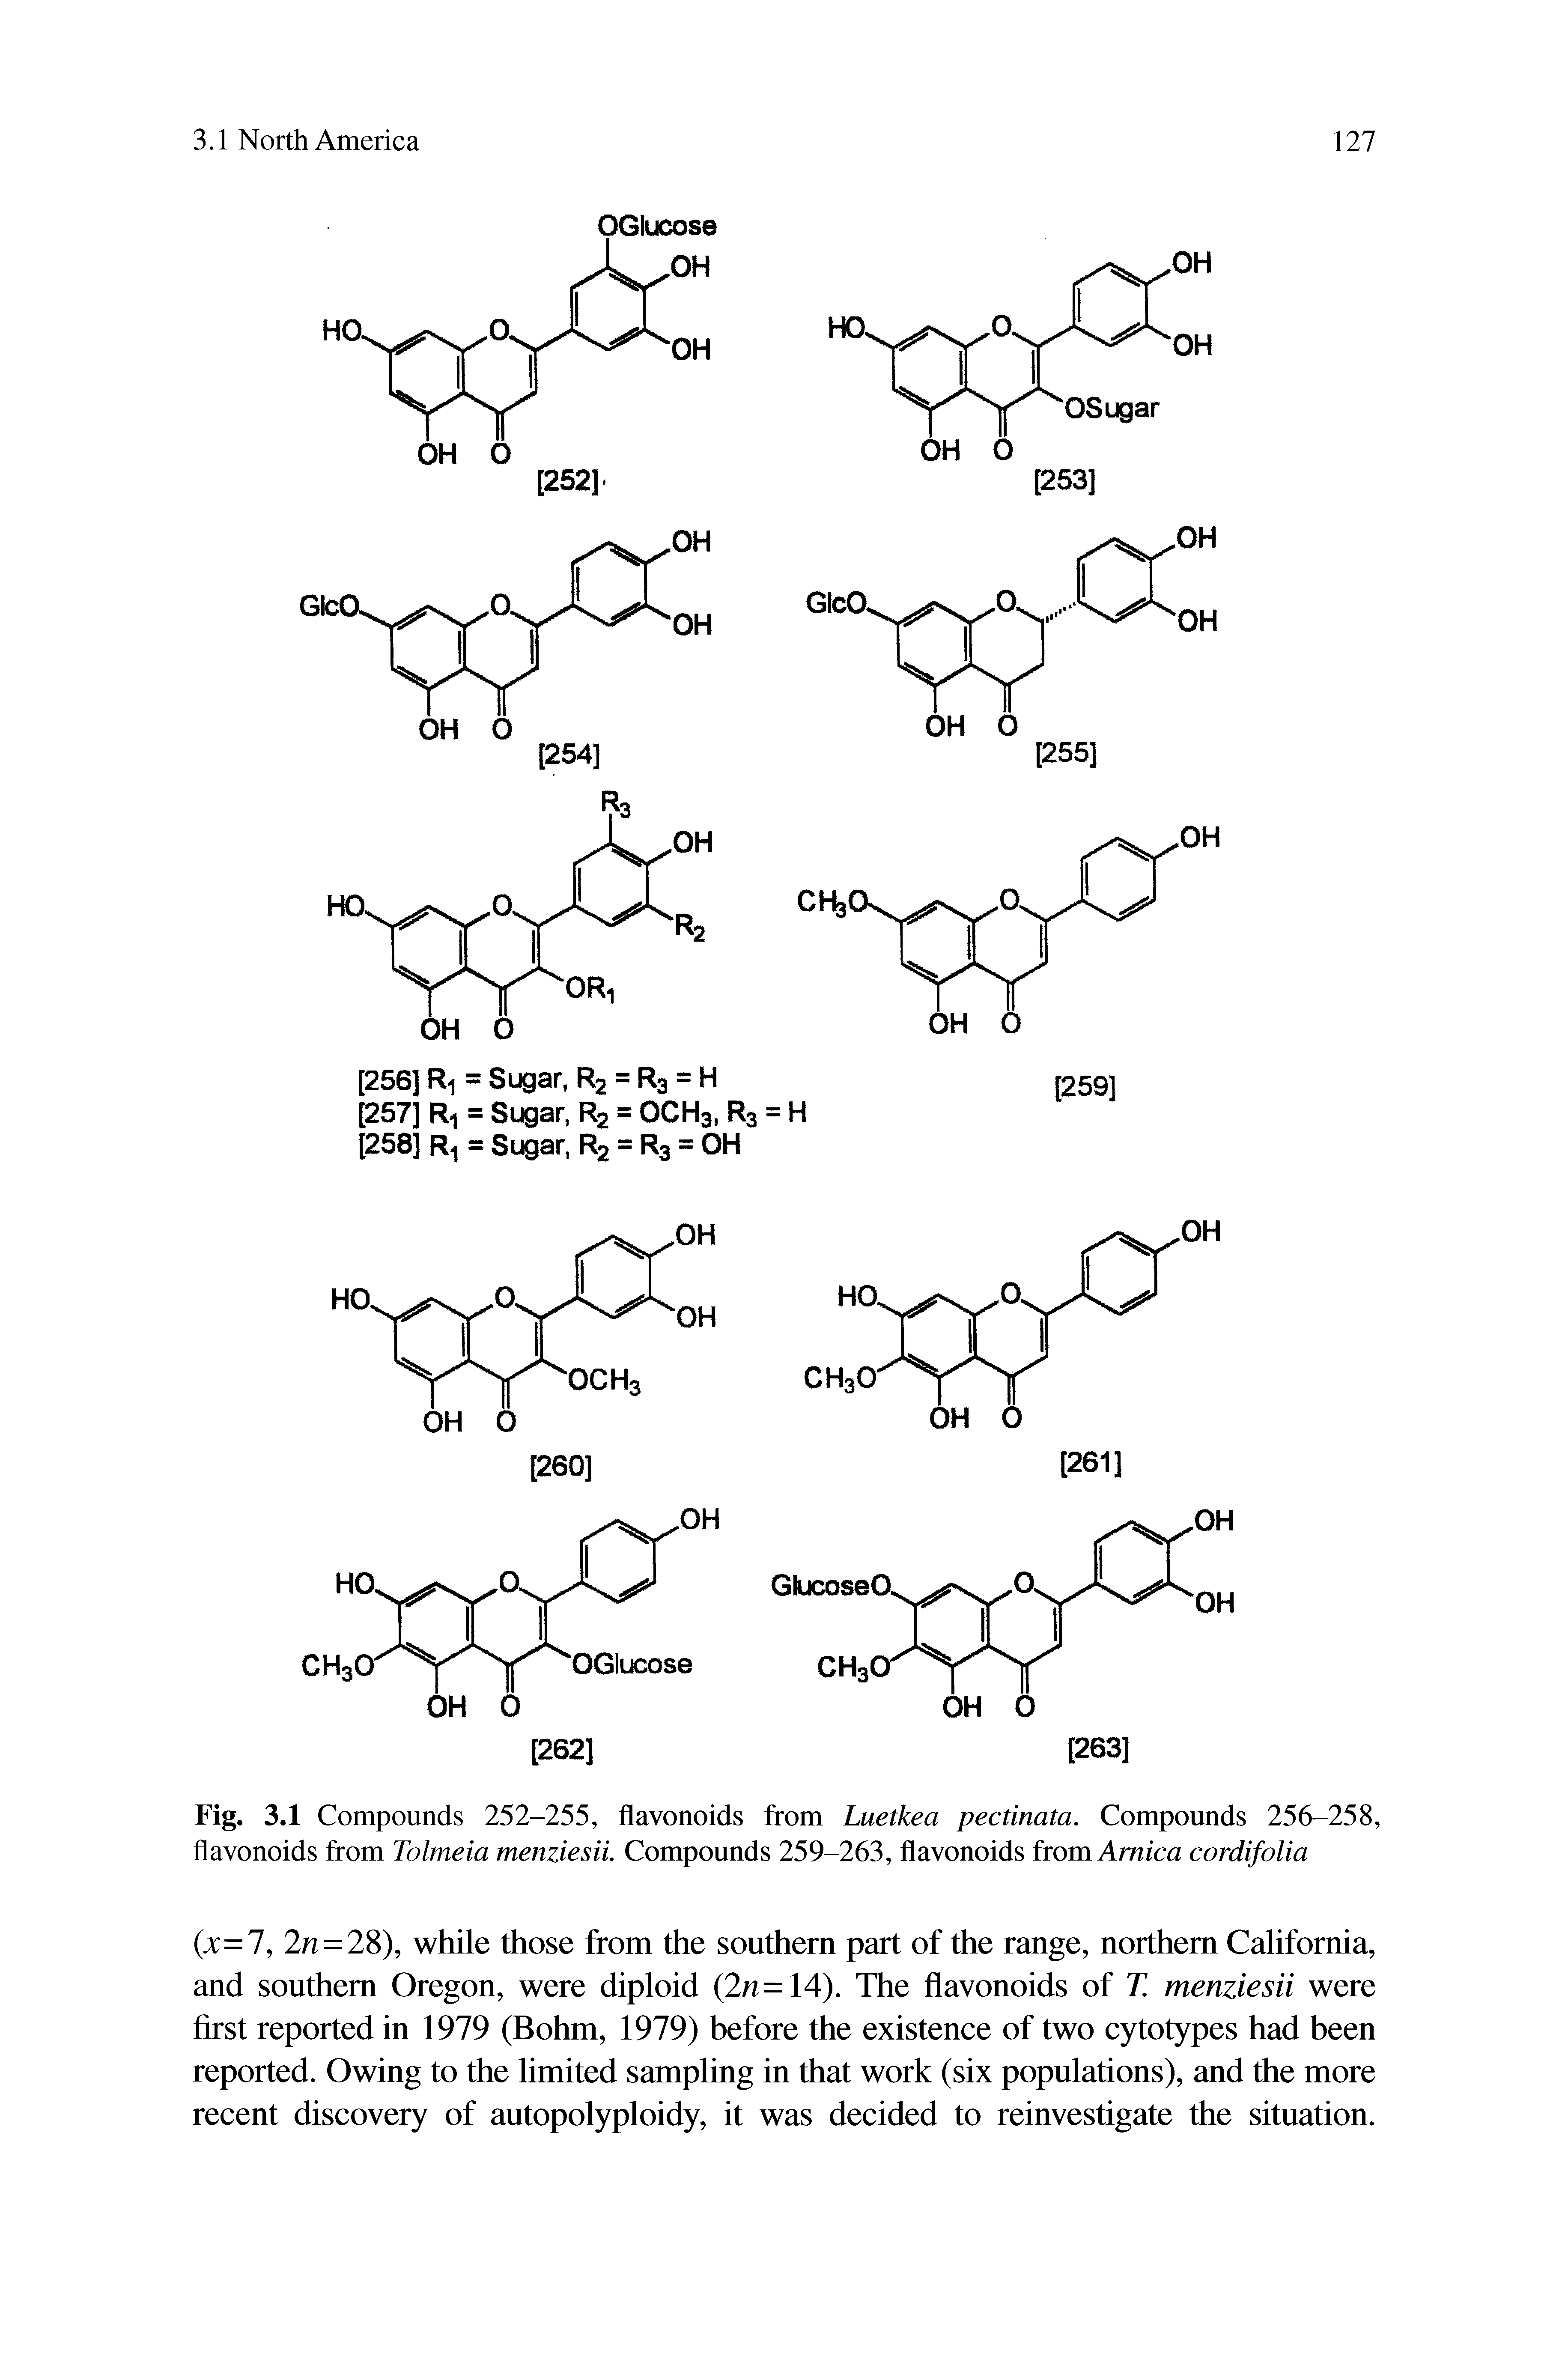 Fig. 3.1 Compounds 252-255, flavonoids from Luetkea pectinata. Compounds 256-258, flavonoids from Tolmeia menziesii. Compounds 259-263, flavonoids from Arnica cordifolia...